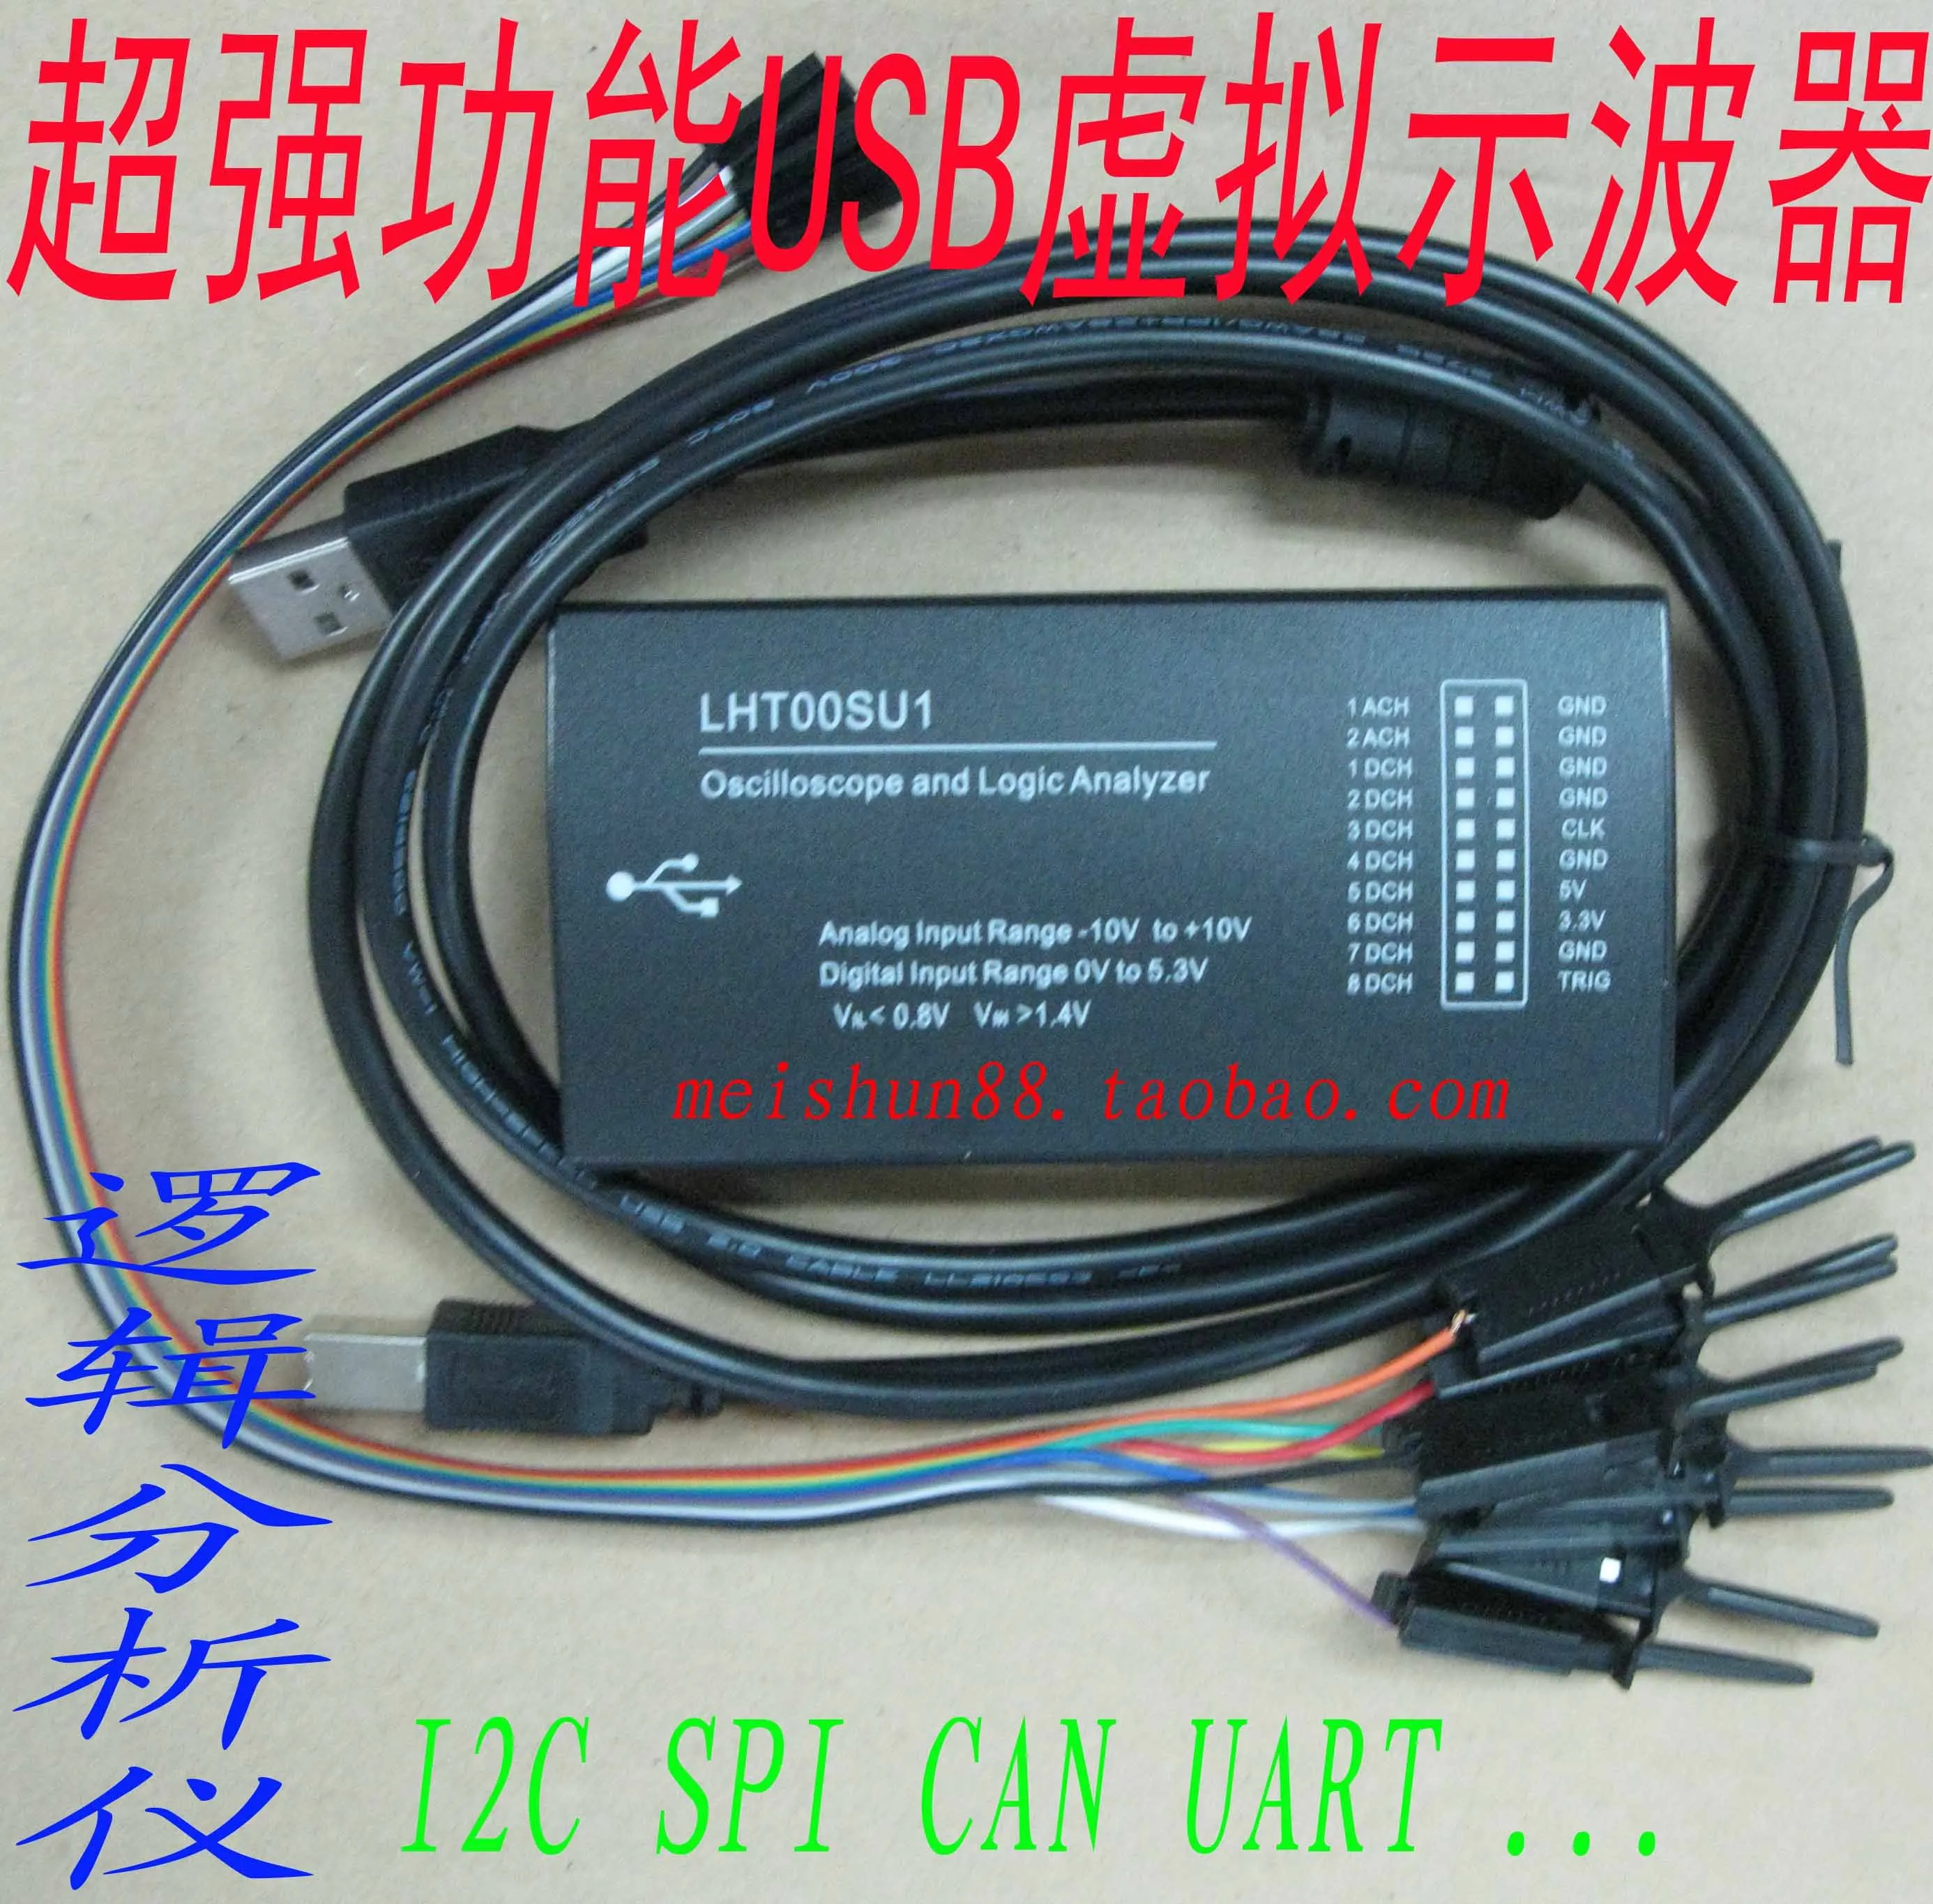 Virtual Oscilloscope Logic Analyzer I2C SPI CAN Uart LHT00SU1 USB Connection